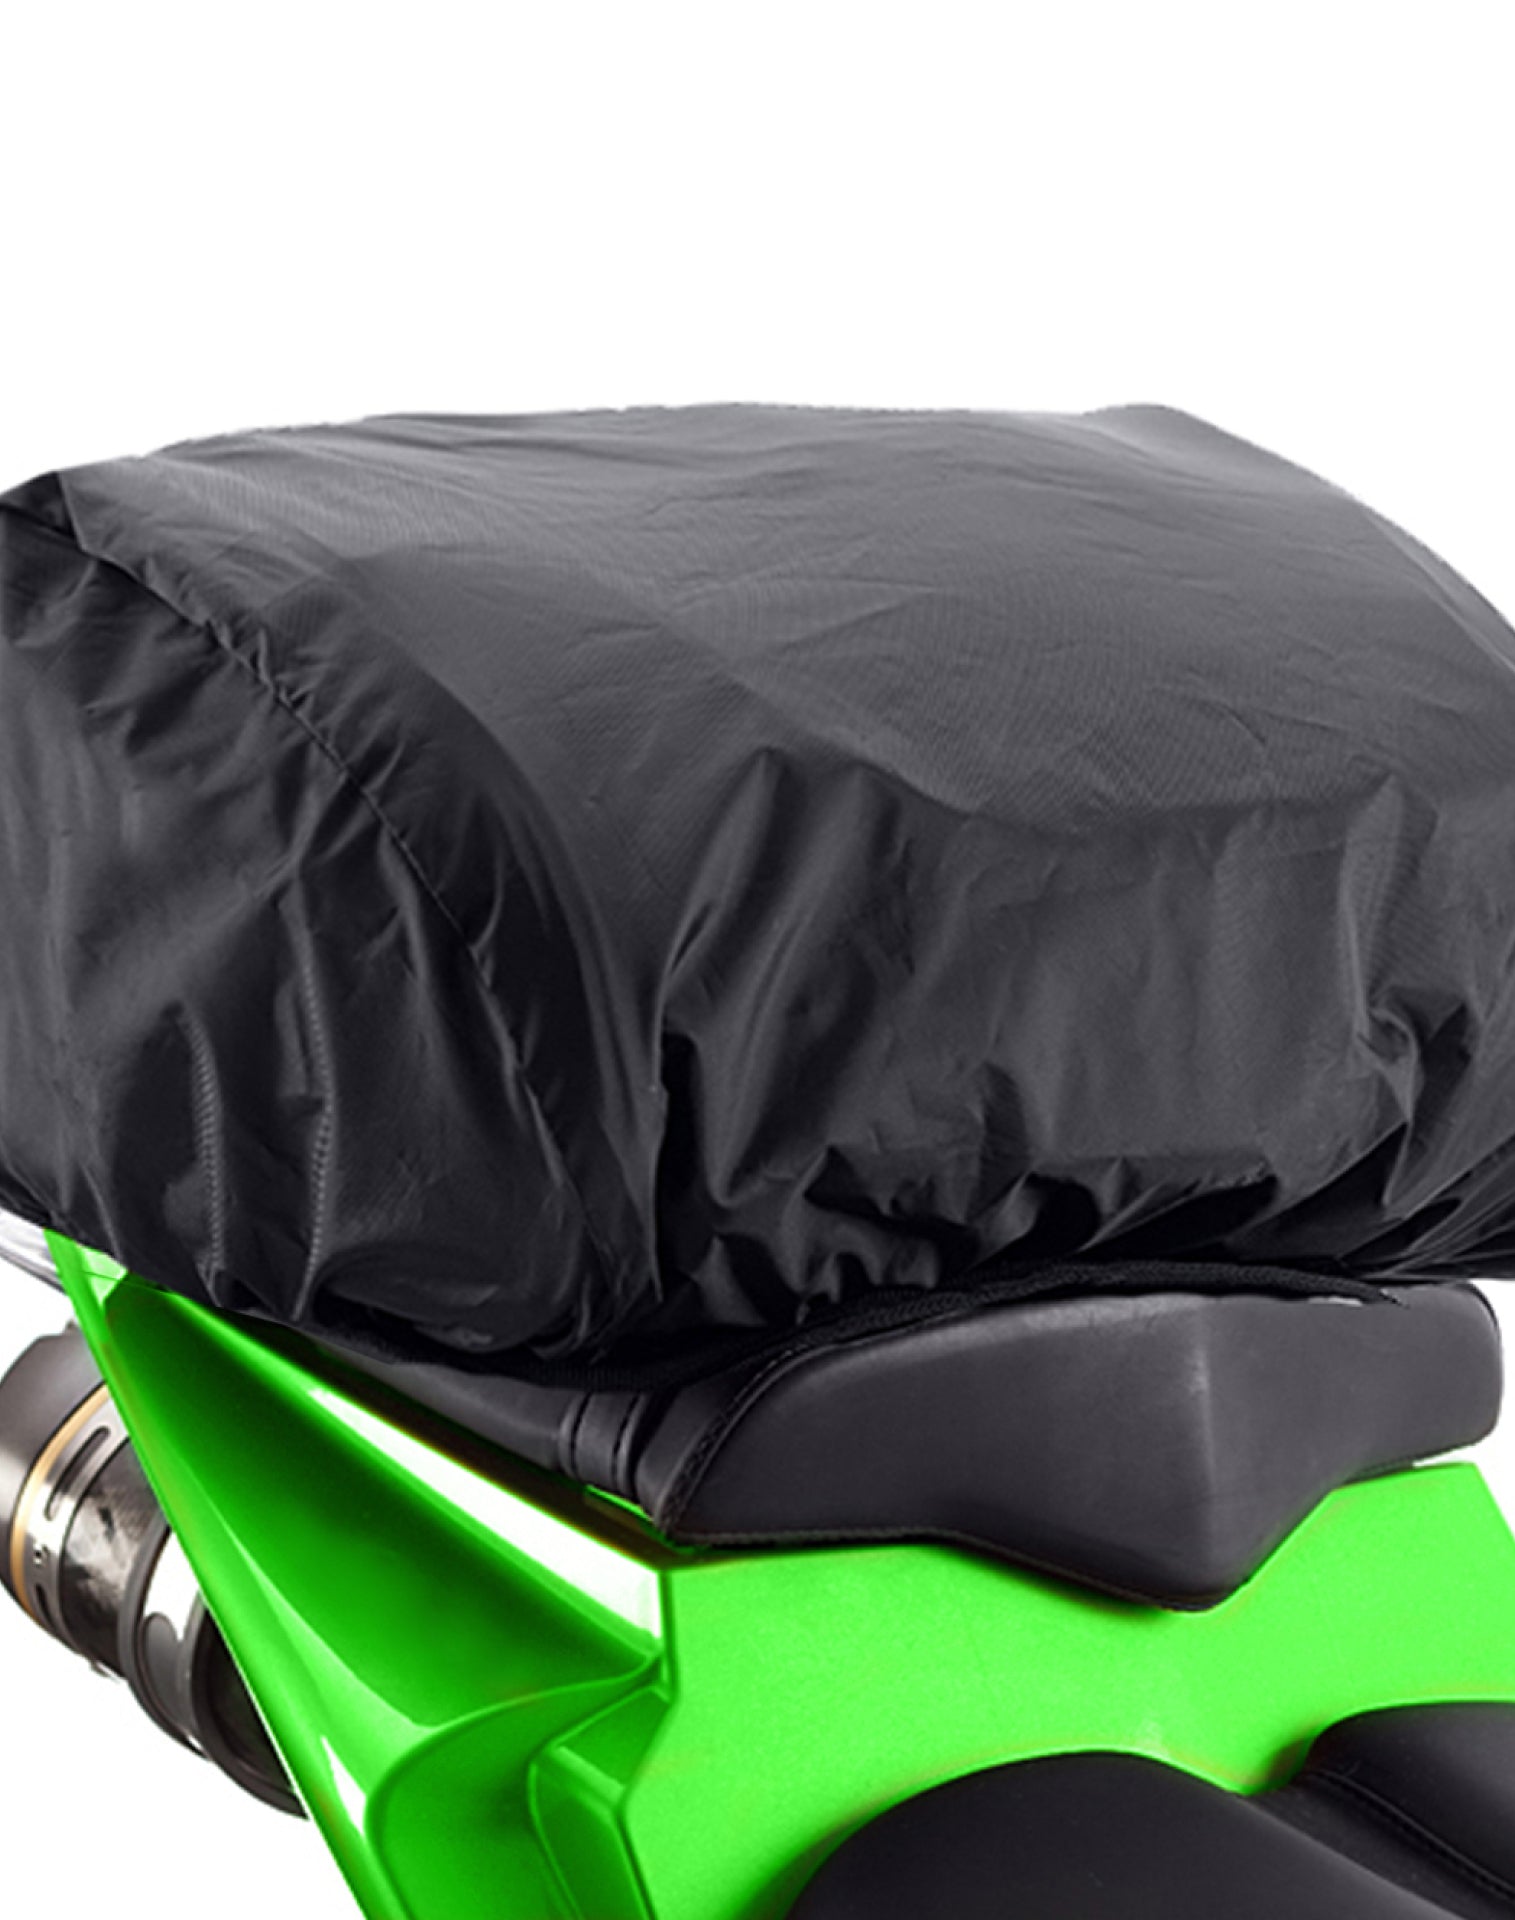 Viking AXE Small Motorcycle Tail Bag for Harley Davidson Durable